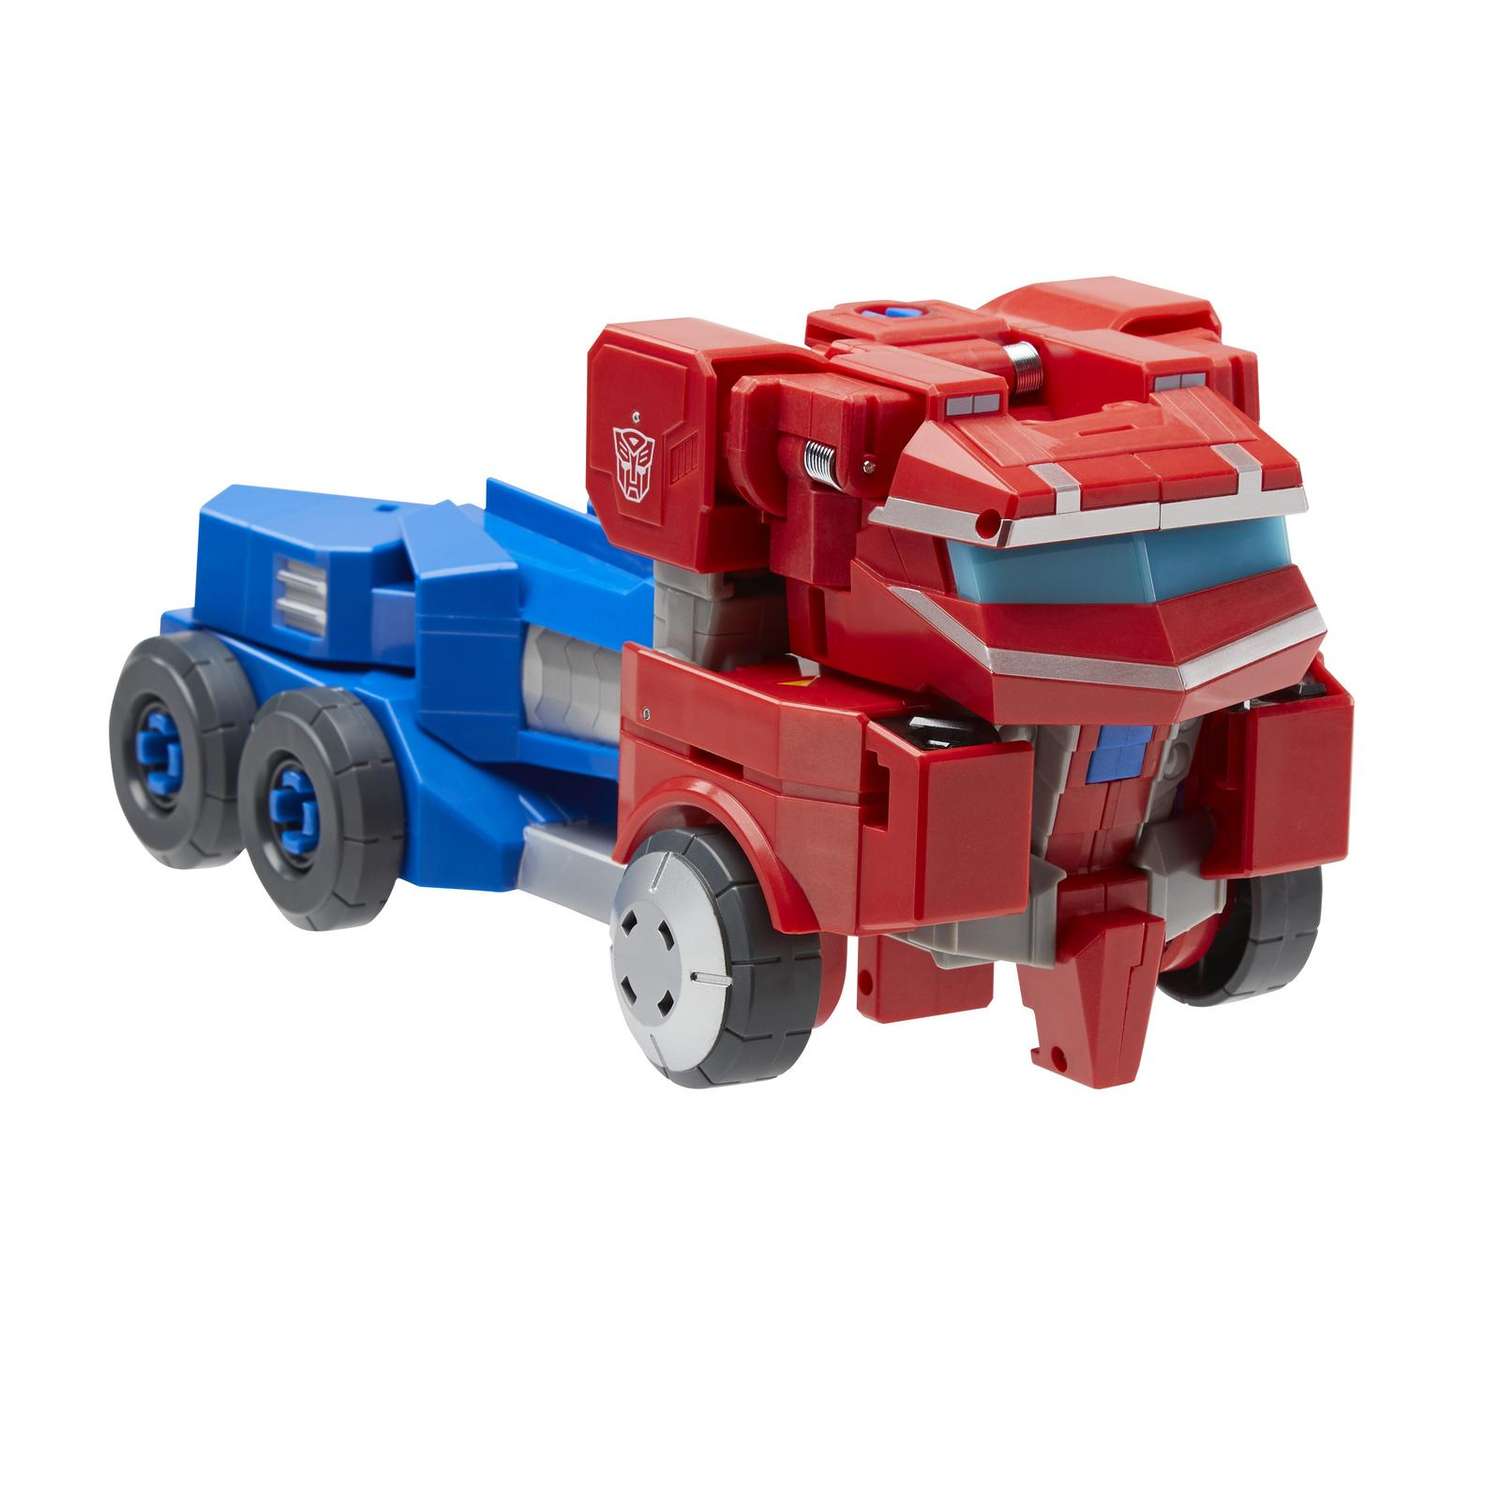 Фигурка Transformers Оптимус Прайм с автоматической трансформацией F27315X6 - фото 13